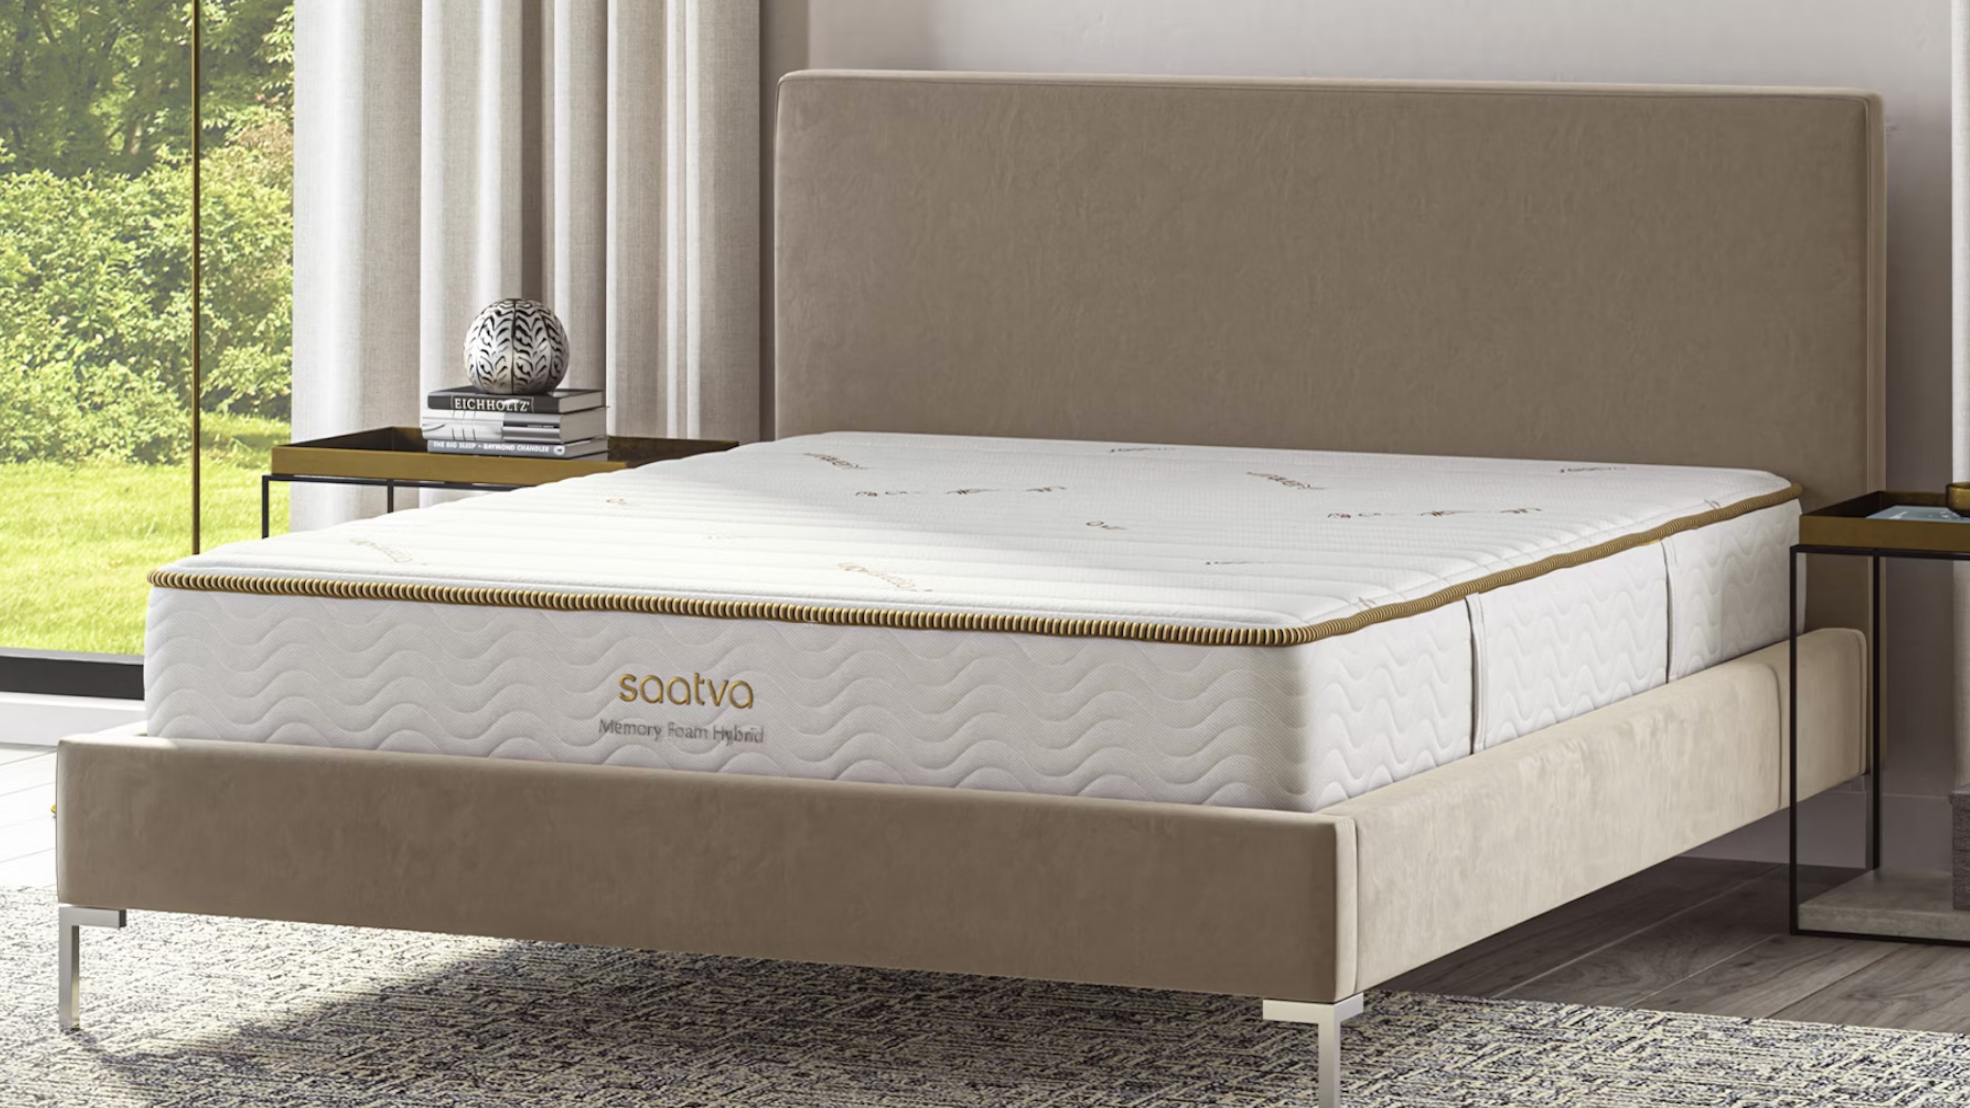 Saatva Memory Foam Hybrid mattress on the platform